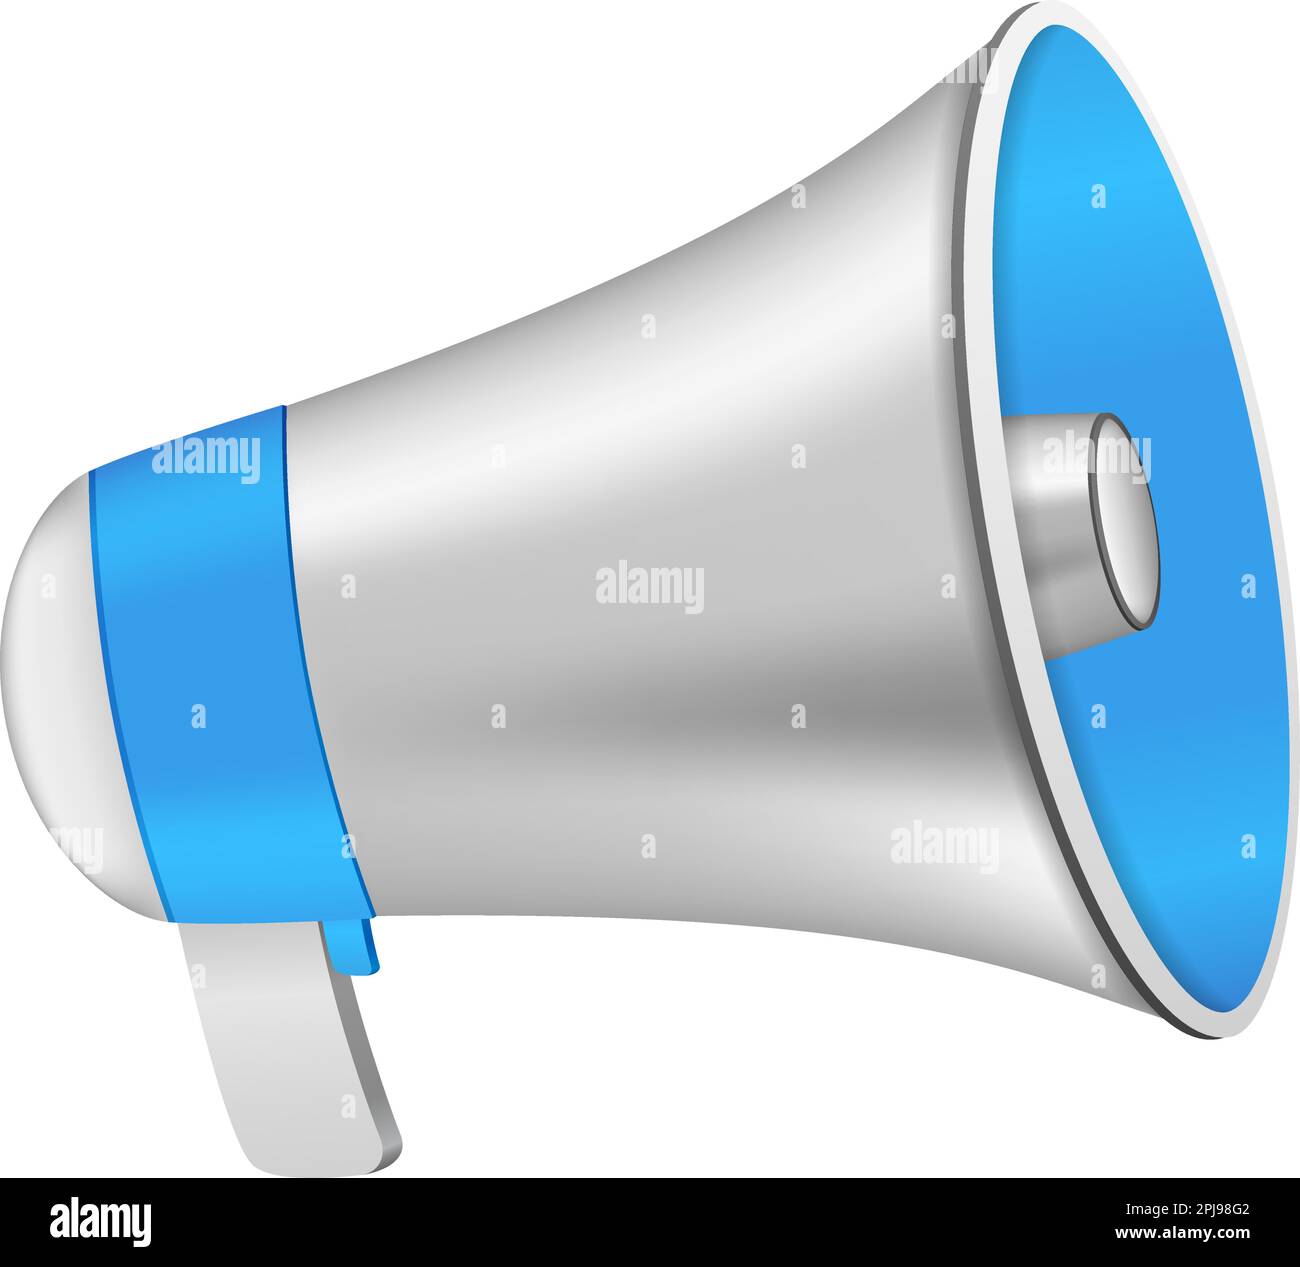 megaphone bullhorn with siren For Premium Entertainment 